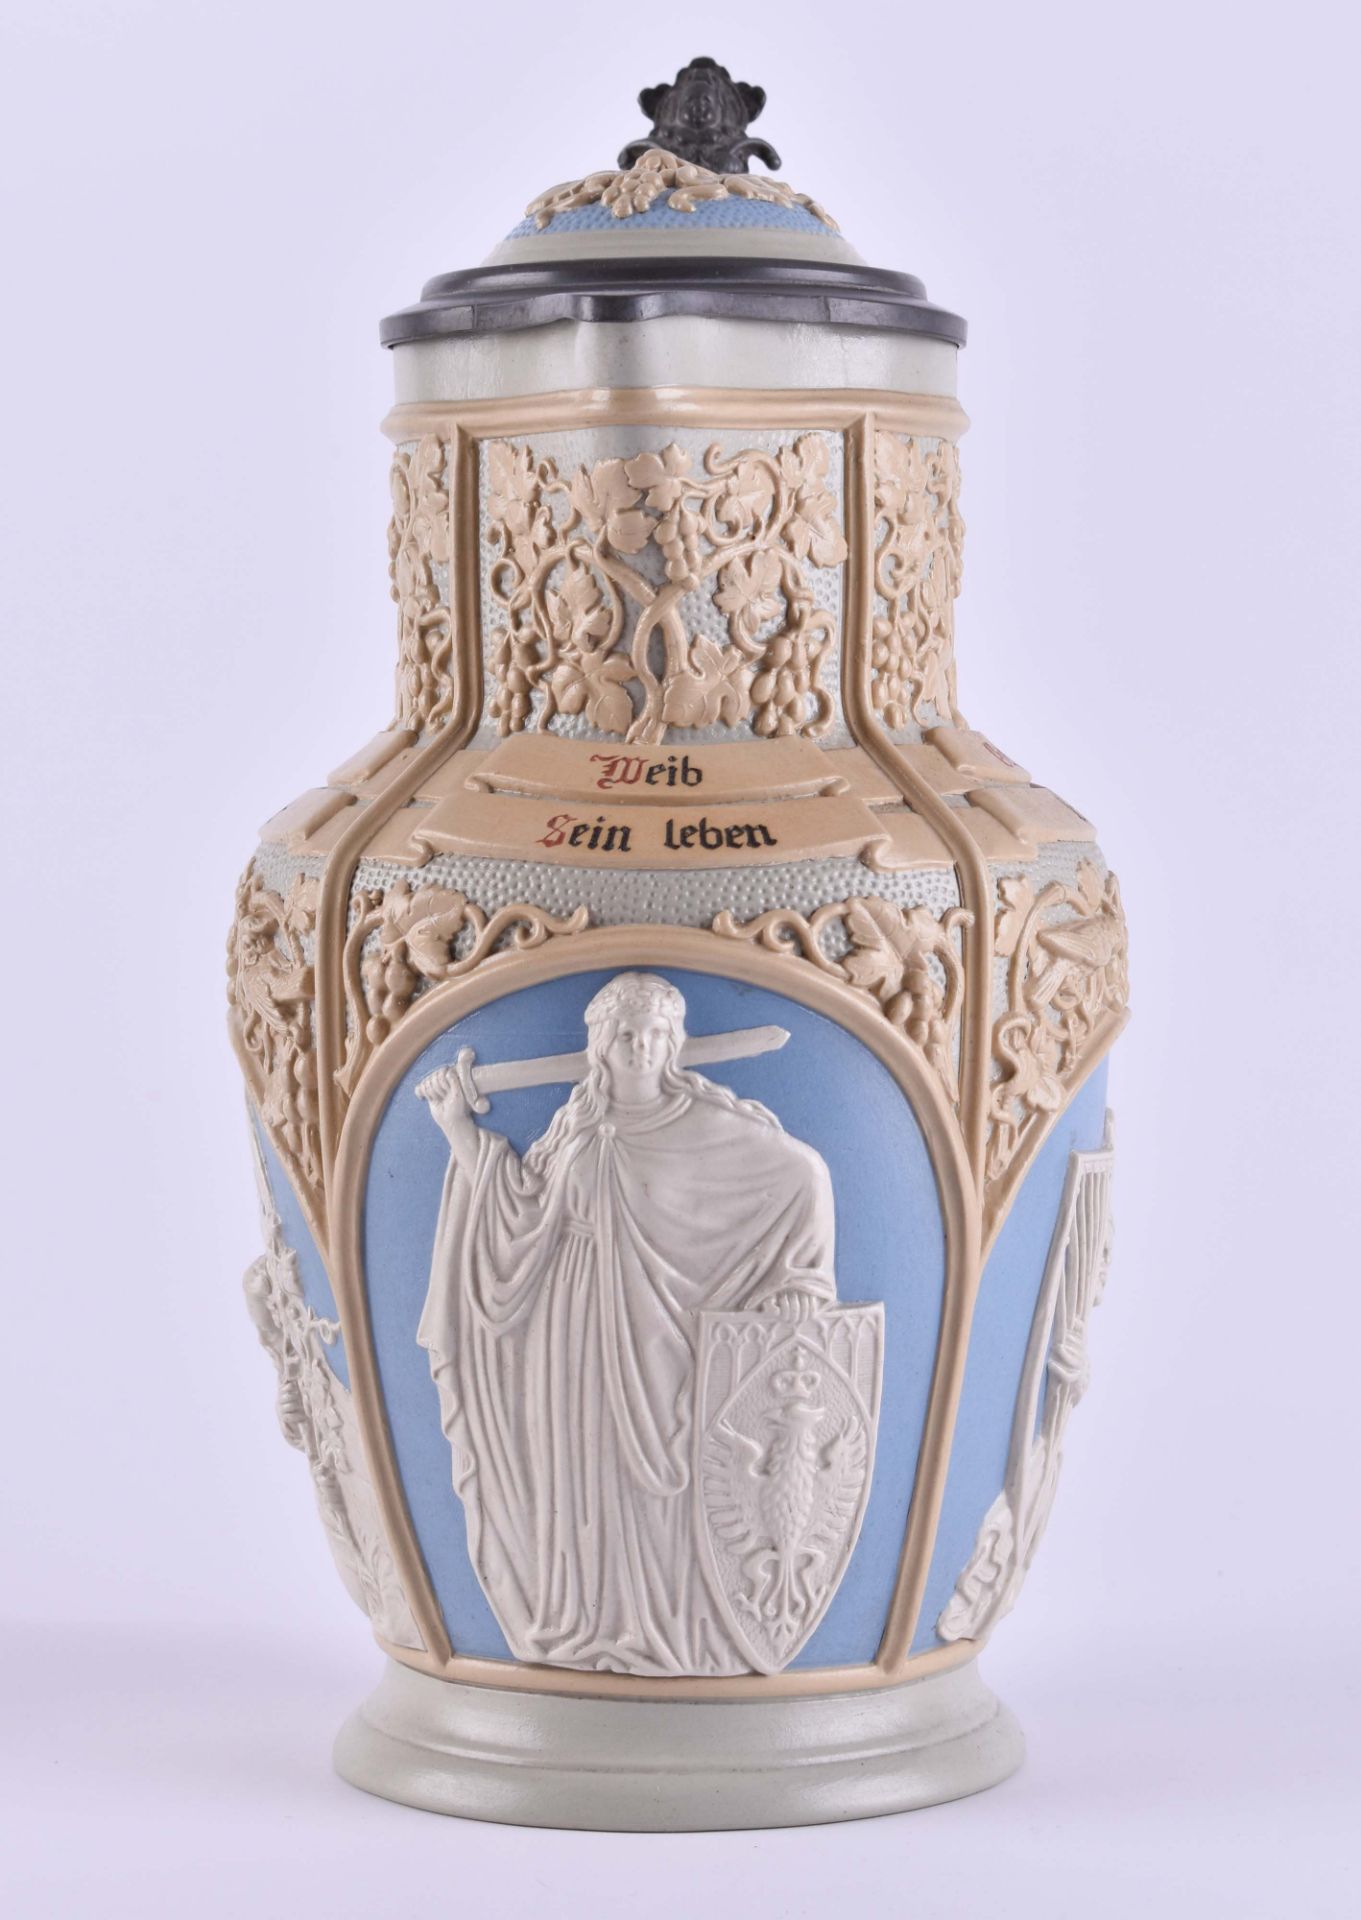 Villeroy & Boch Mettlach wine jug around 1890 / 1900height 30 cm, capacity 2.5 lVilleroy & Boch - Image 3 of 6